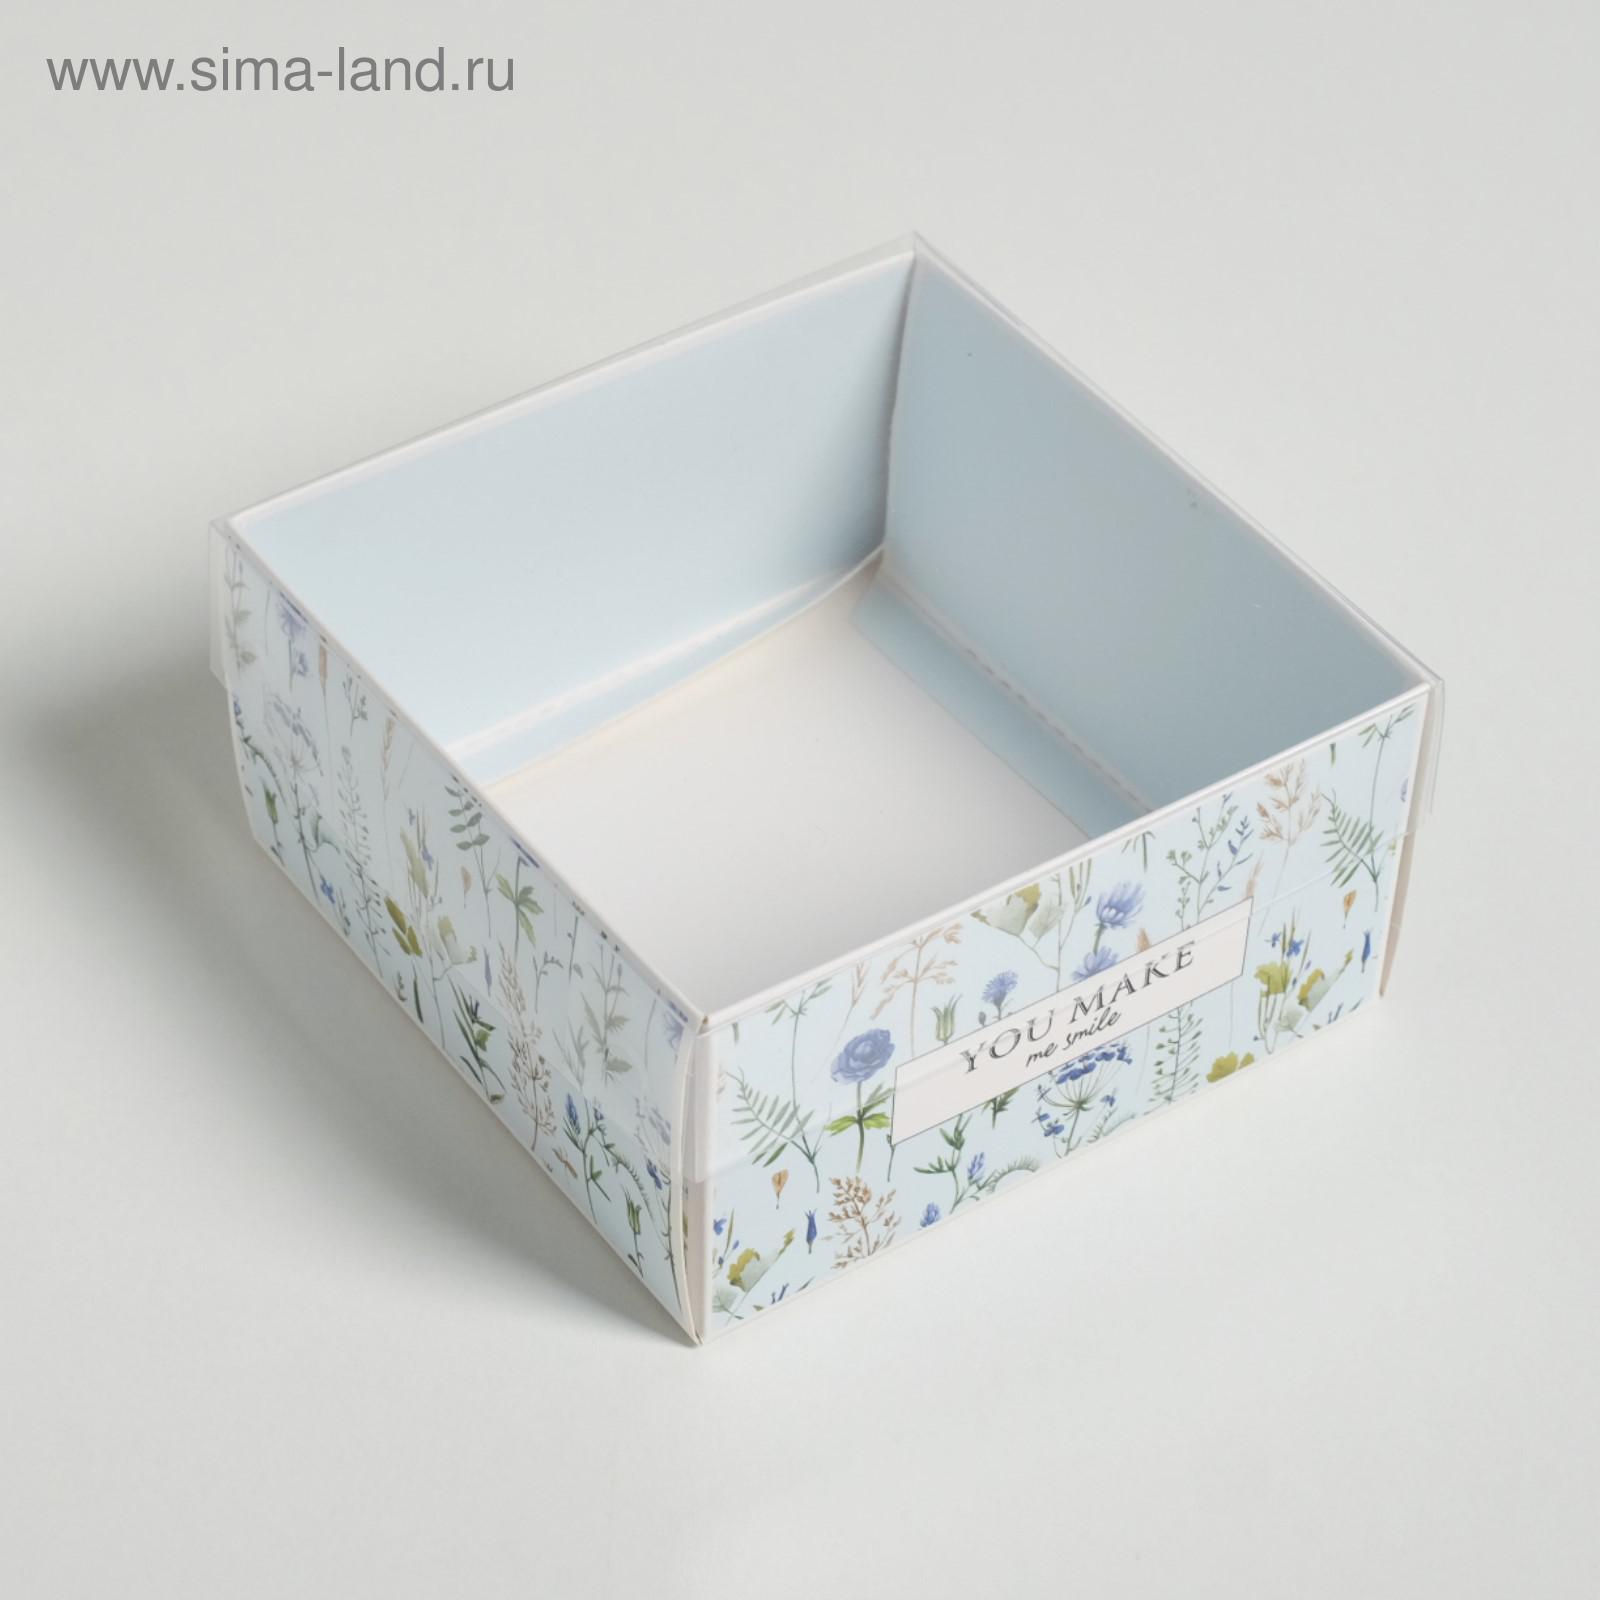 Коробка под бенто-торт с PVC крышкой «You make me smile», 12 х 6 х 11.5 см